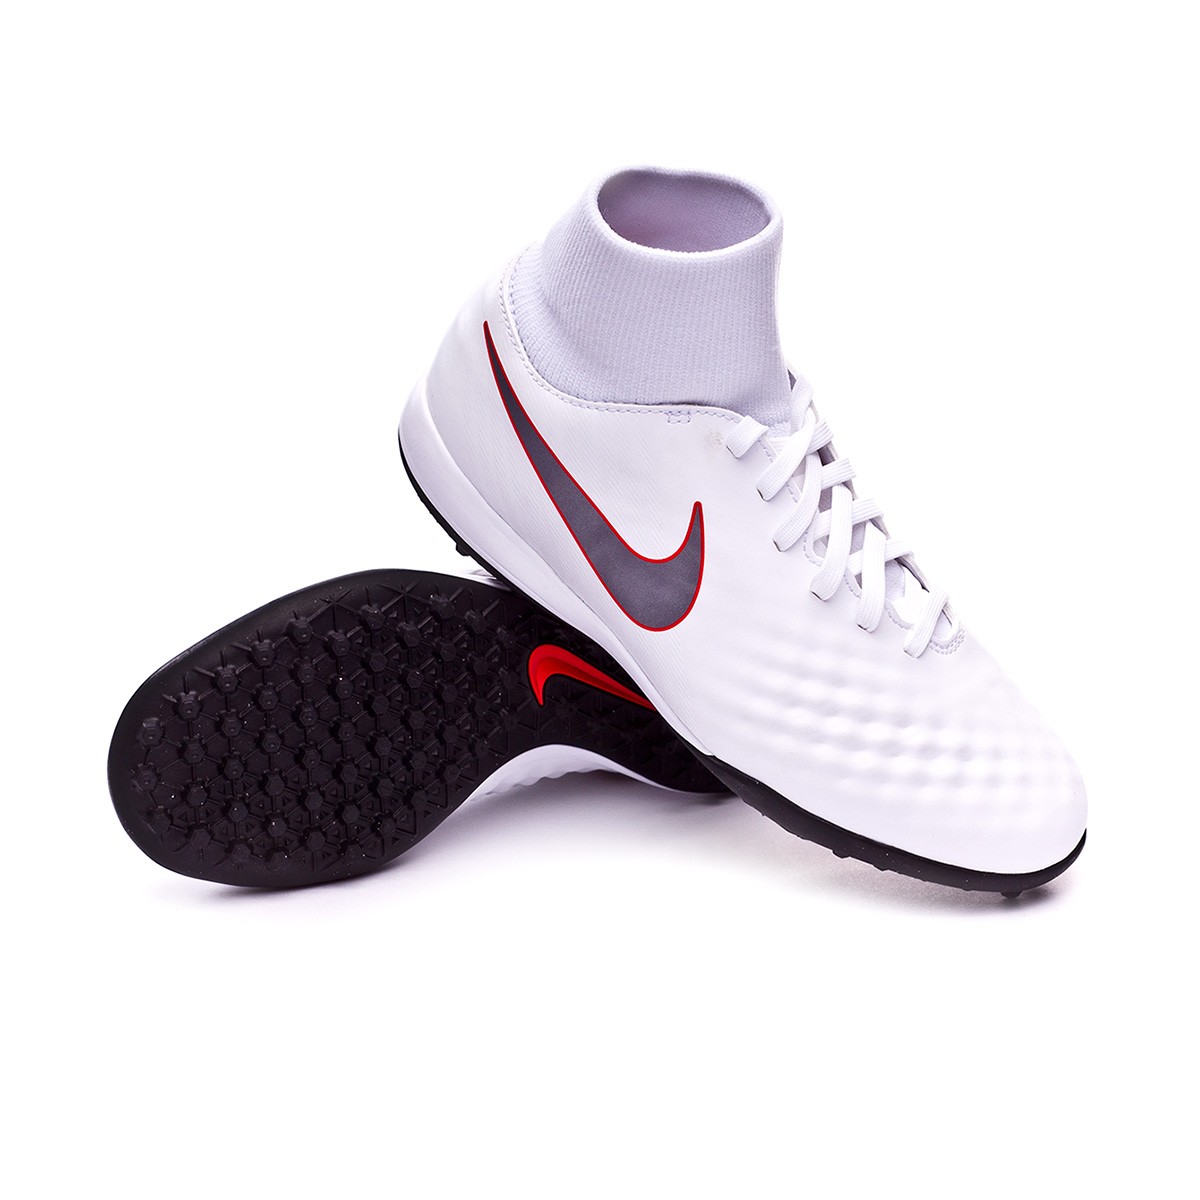 Shop Nike Magista Soccer Cleats & Shoes PeleSoccer.com Pelé